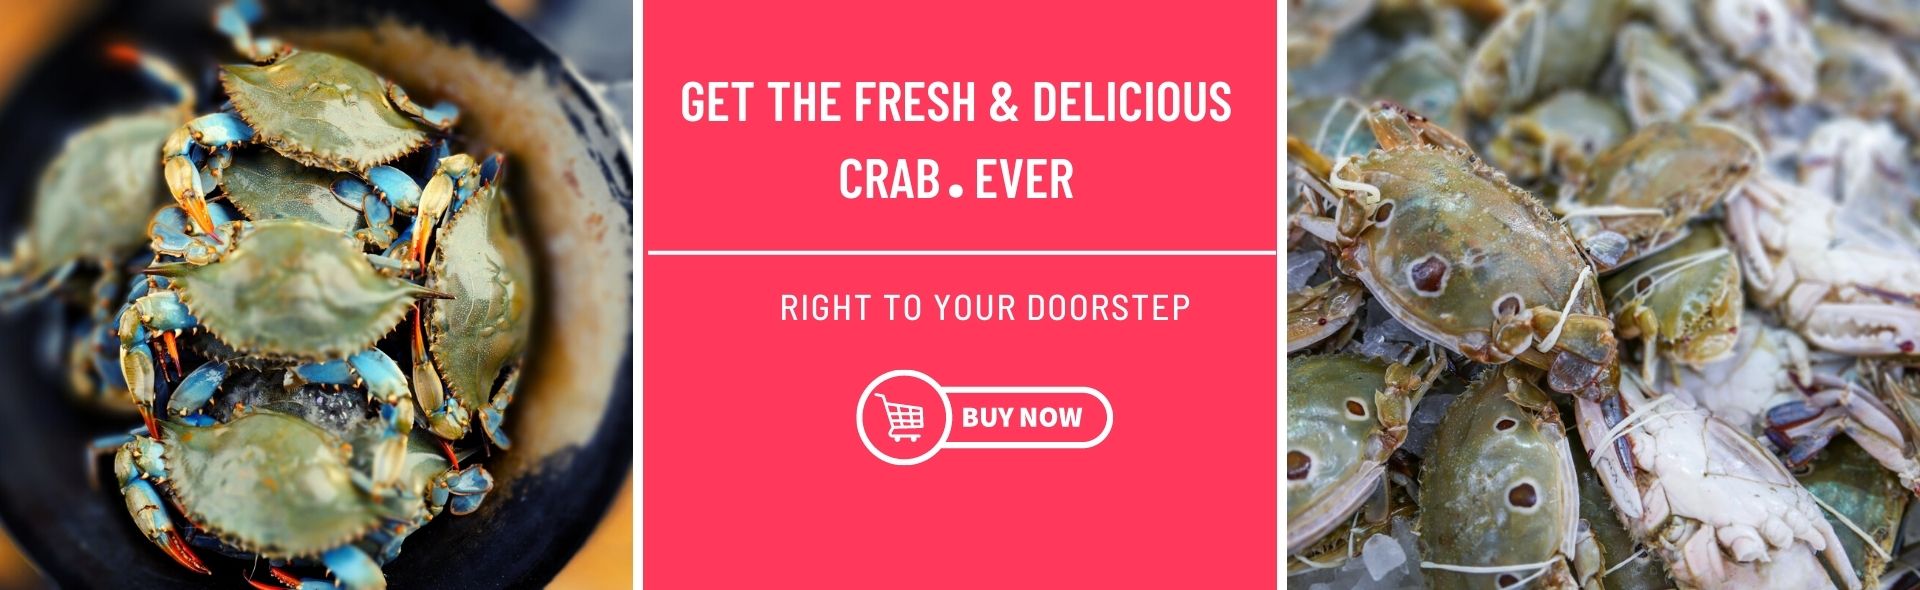 Buy Raw Crab Online